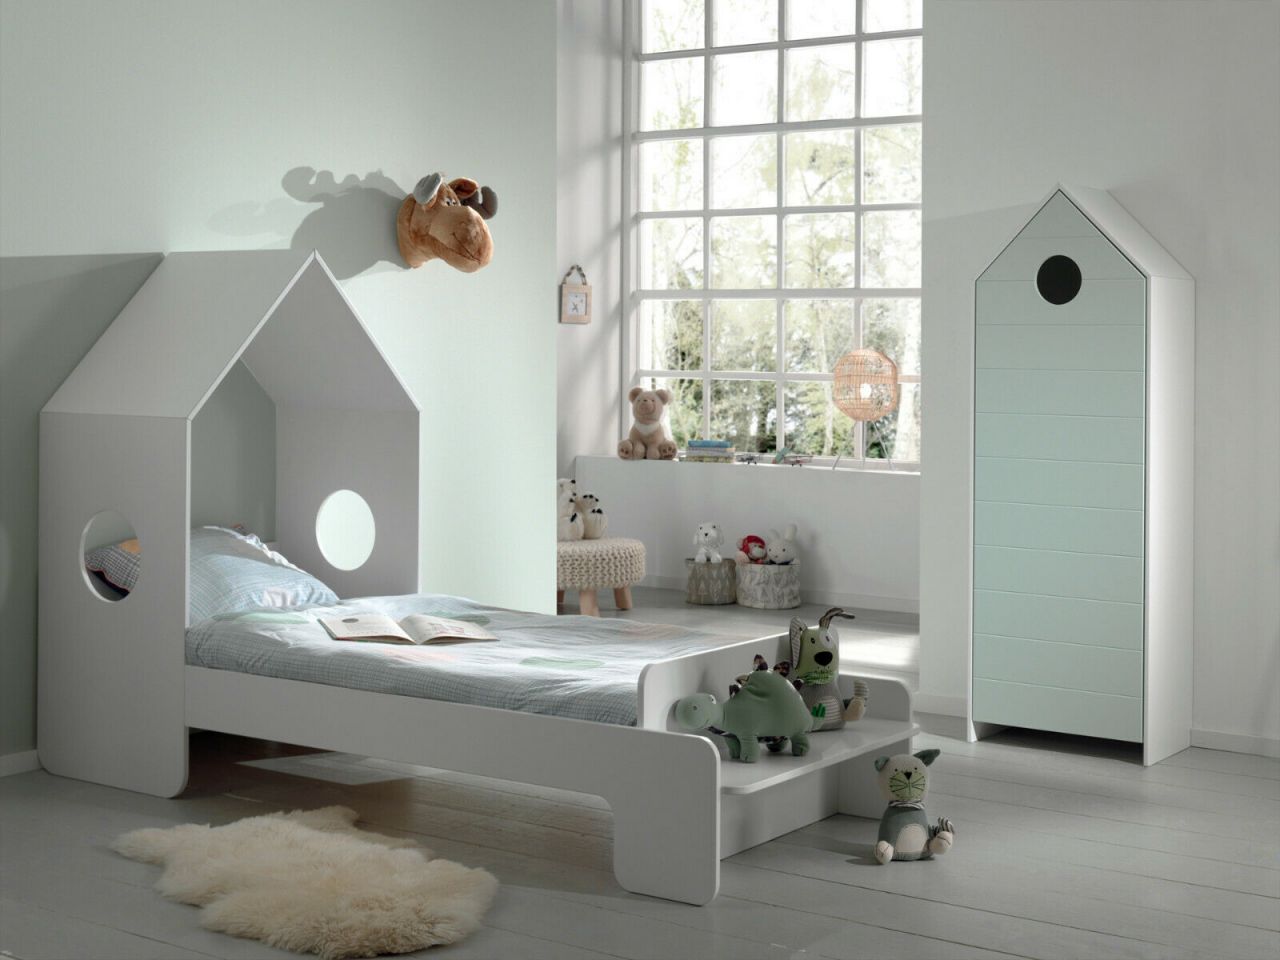 Vipack: Artikelset "CASAMI" 2- Teilig- Kinderbett Wäscheschrank -Weiß / Mint von VIPACK